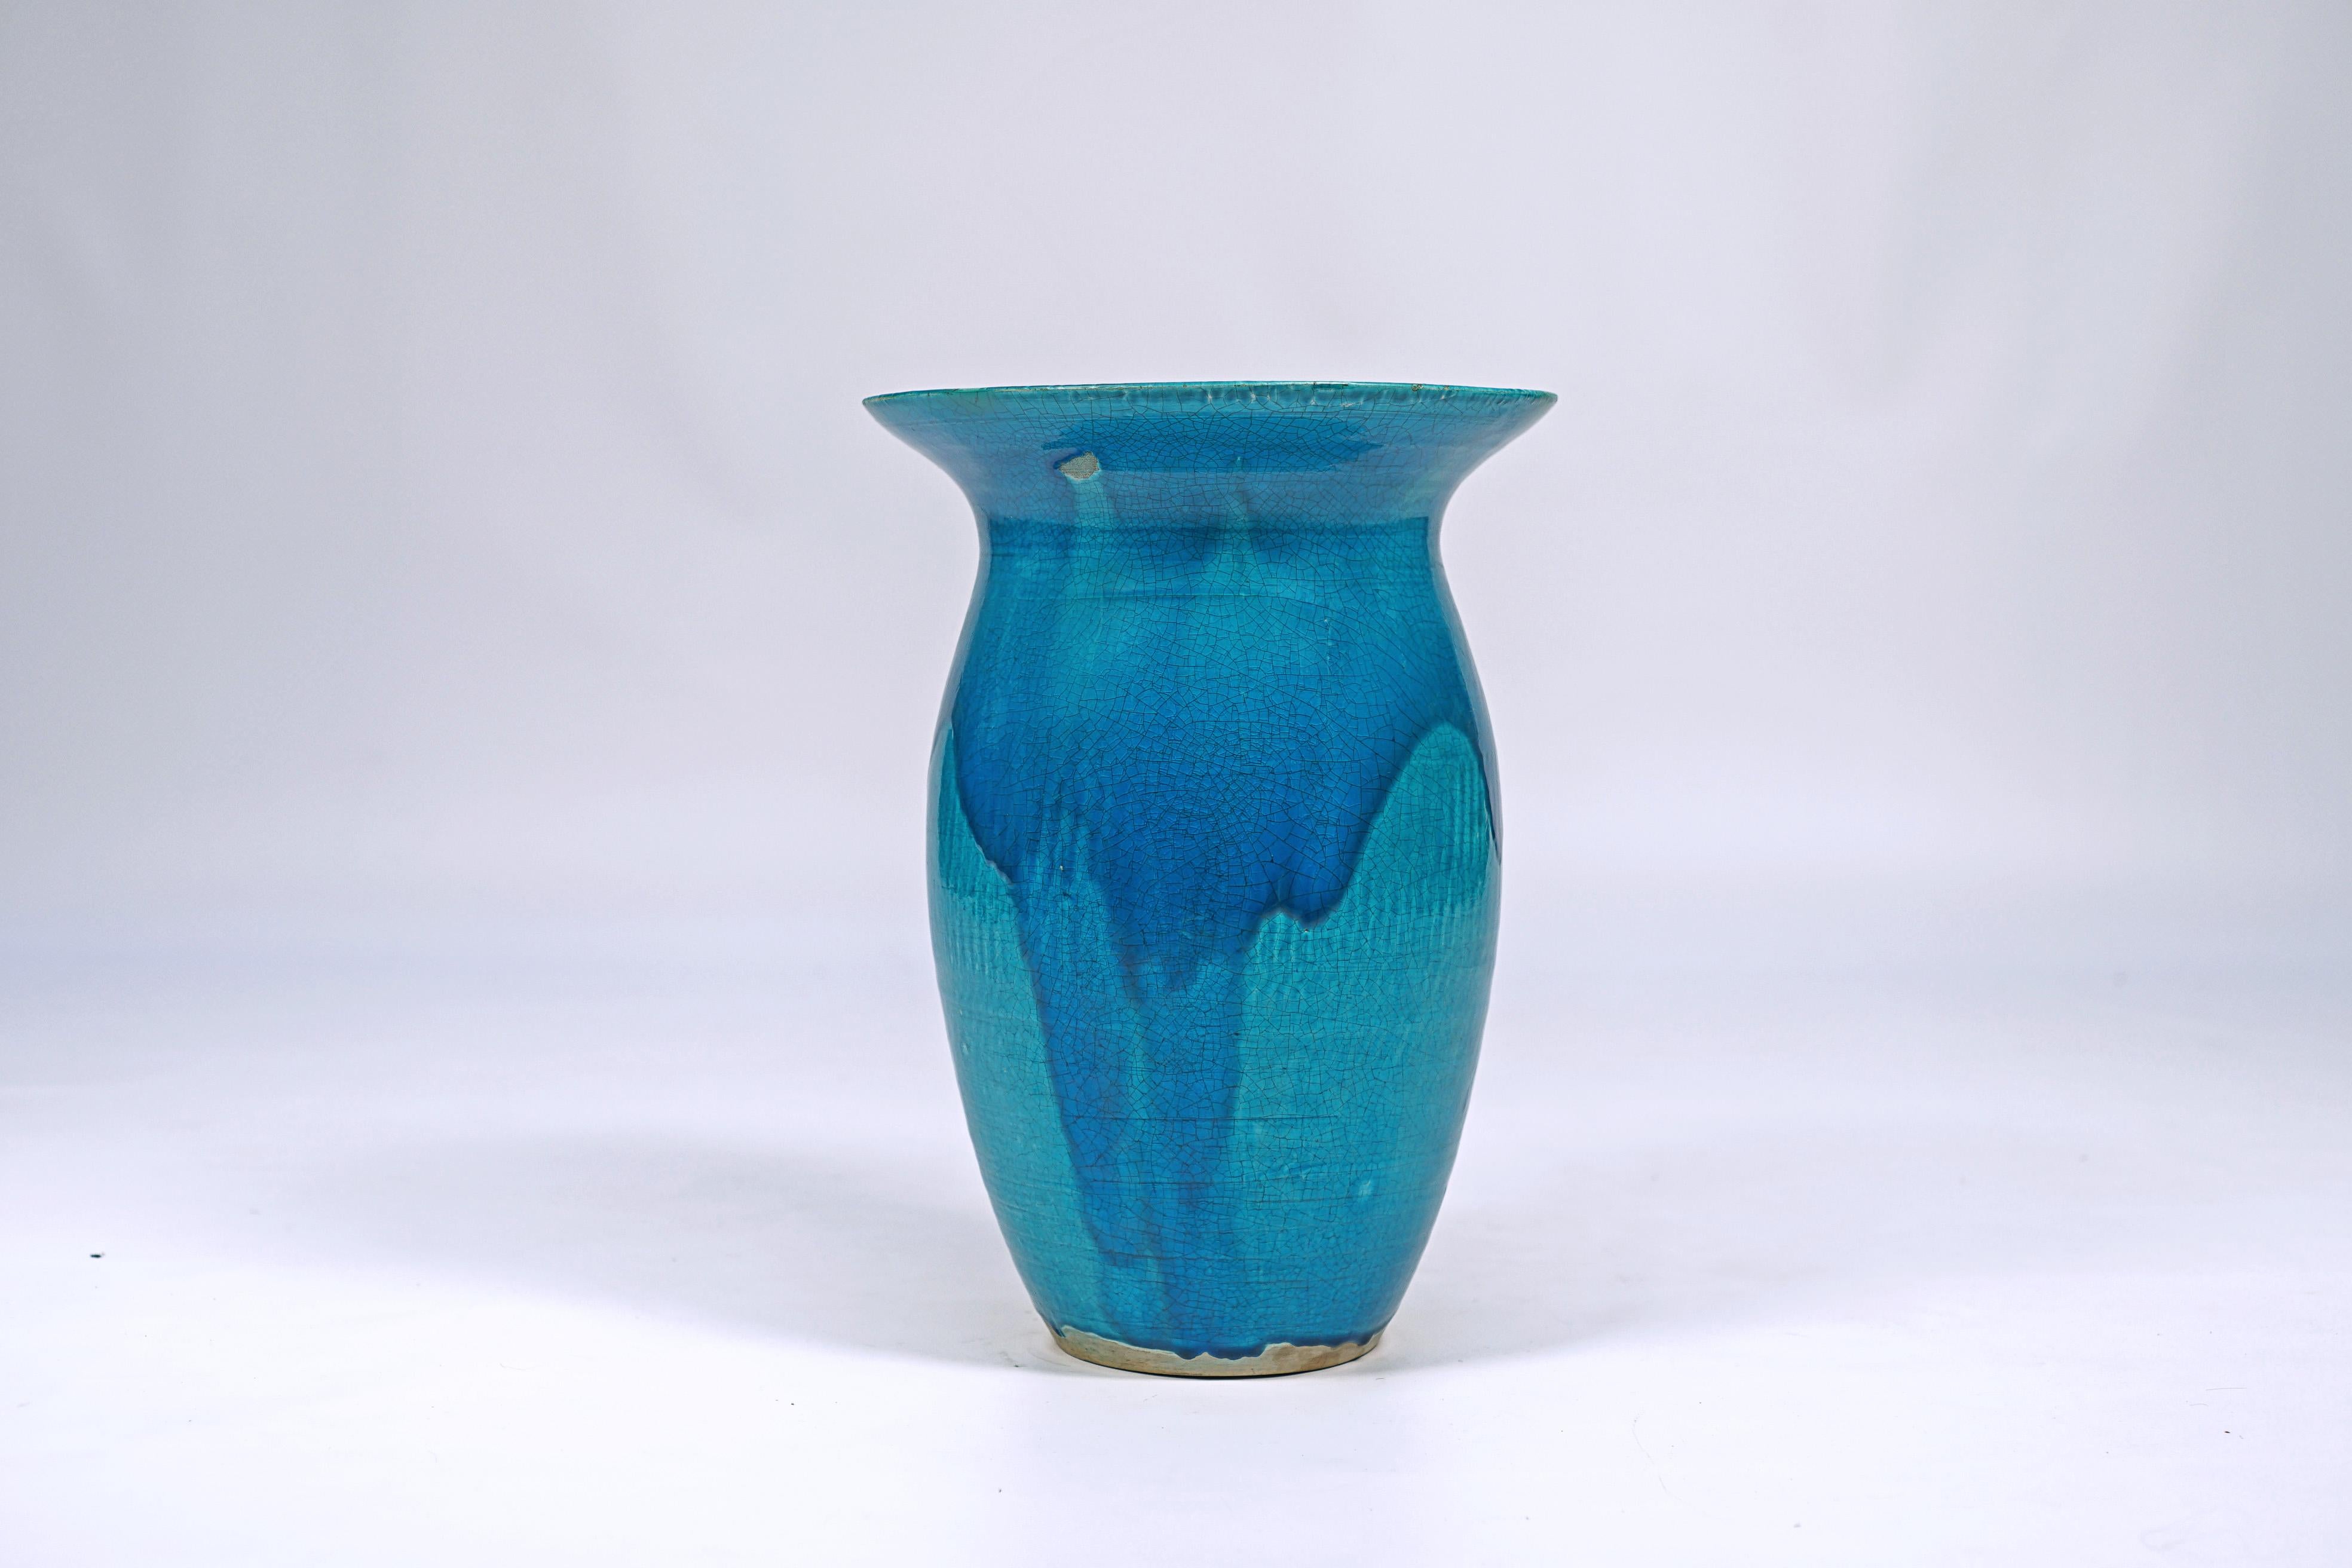 Glazed ceramic vase, “Blue Turquoise” color, made by Jean Besnad (1889 -1958) Signed JB France.

France, CIRCA 1930.